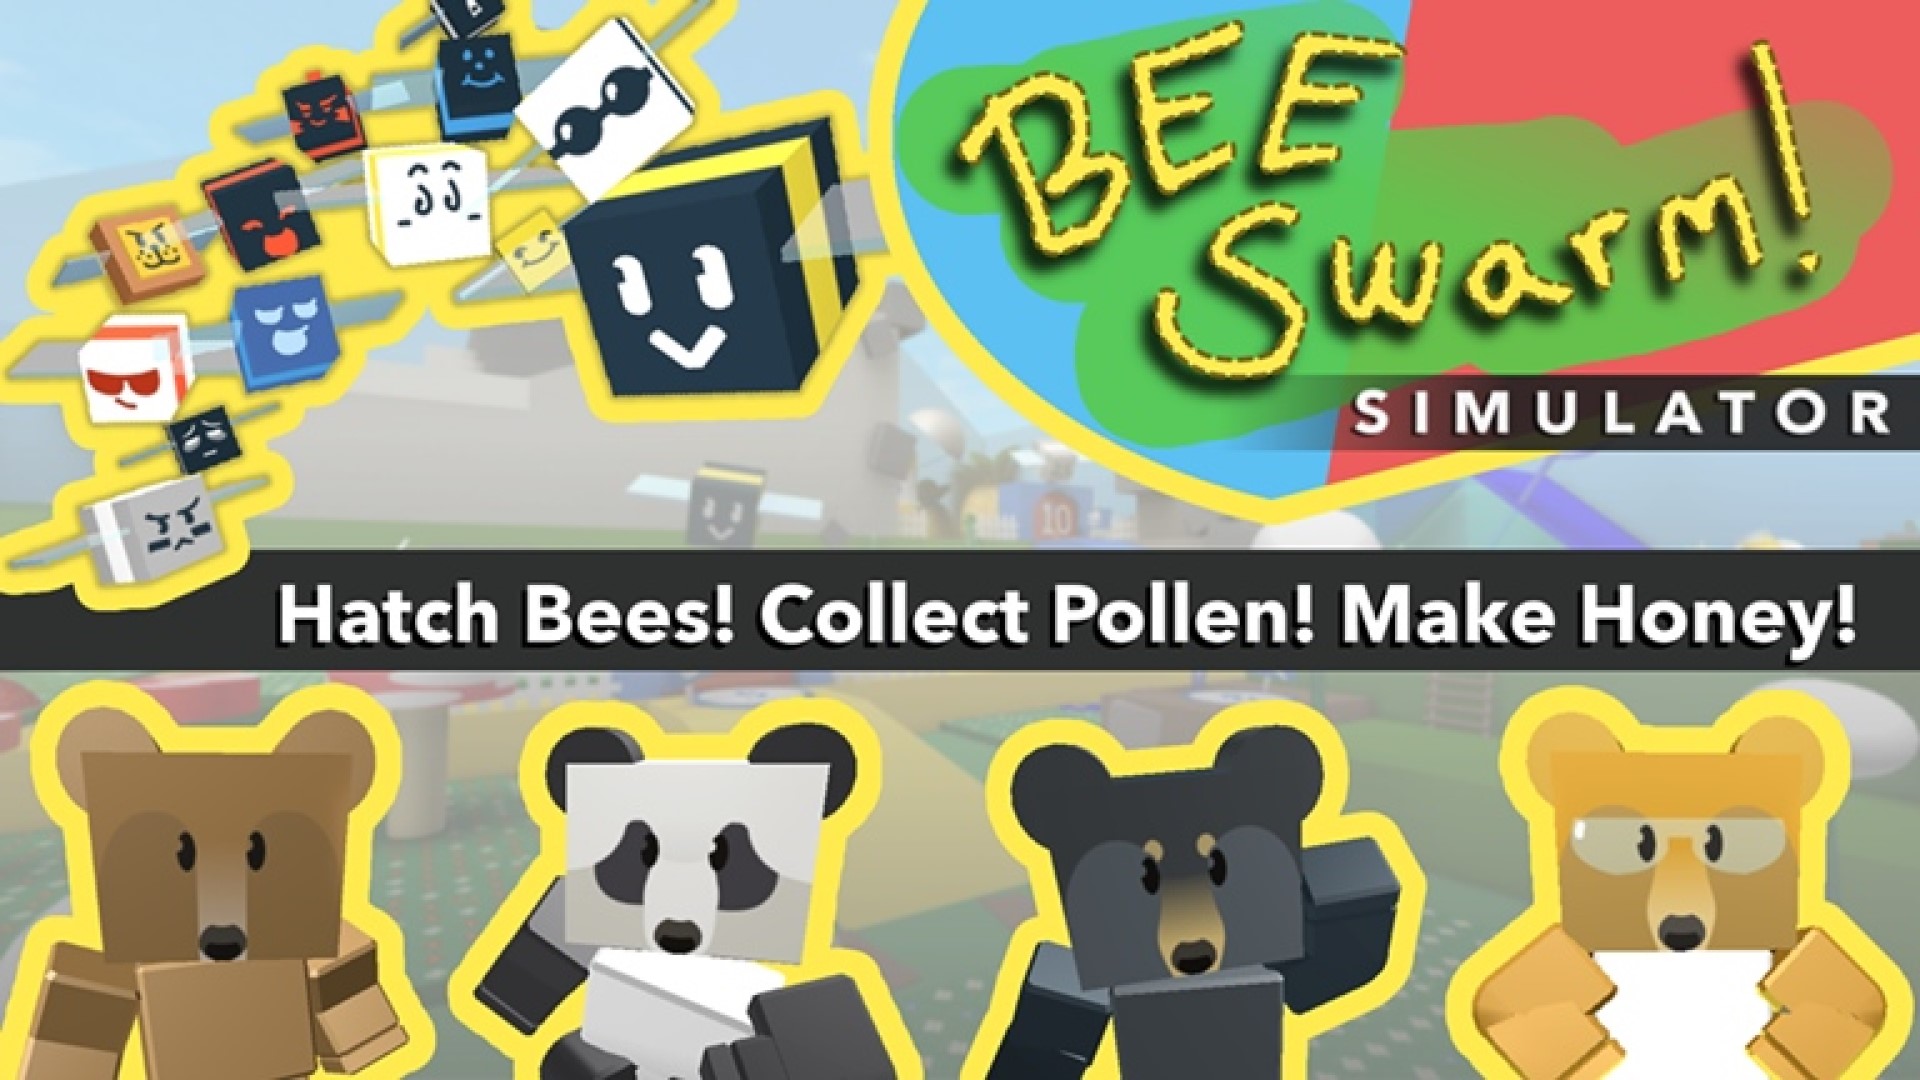 Bee Swarm Simulator codes – honey, buffs, and tickets | Pocket Tactics